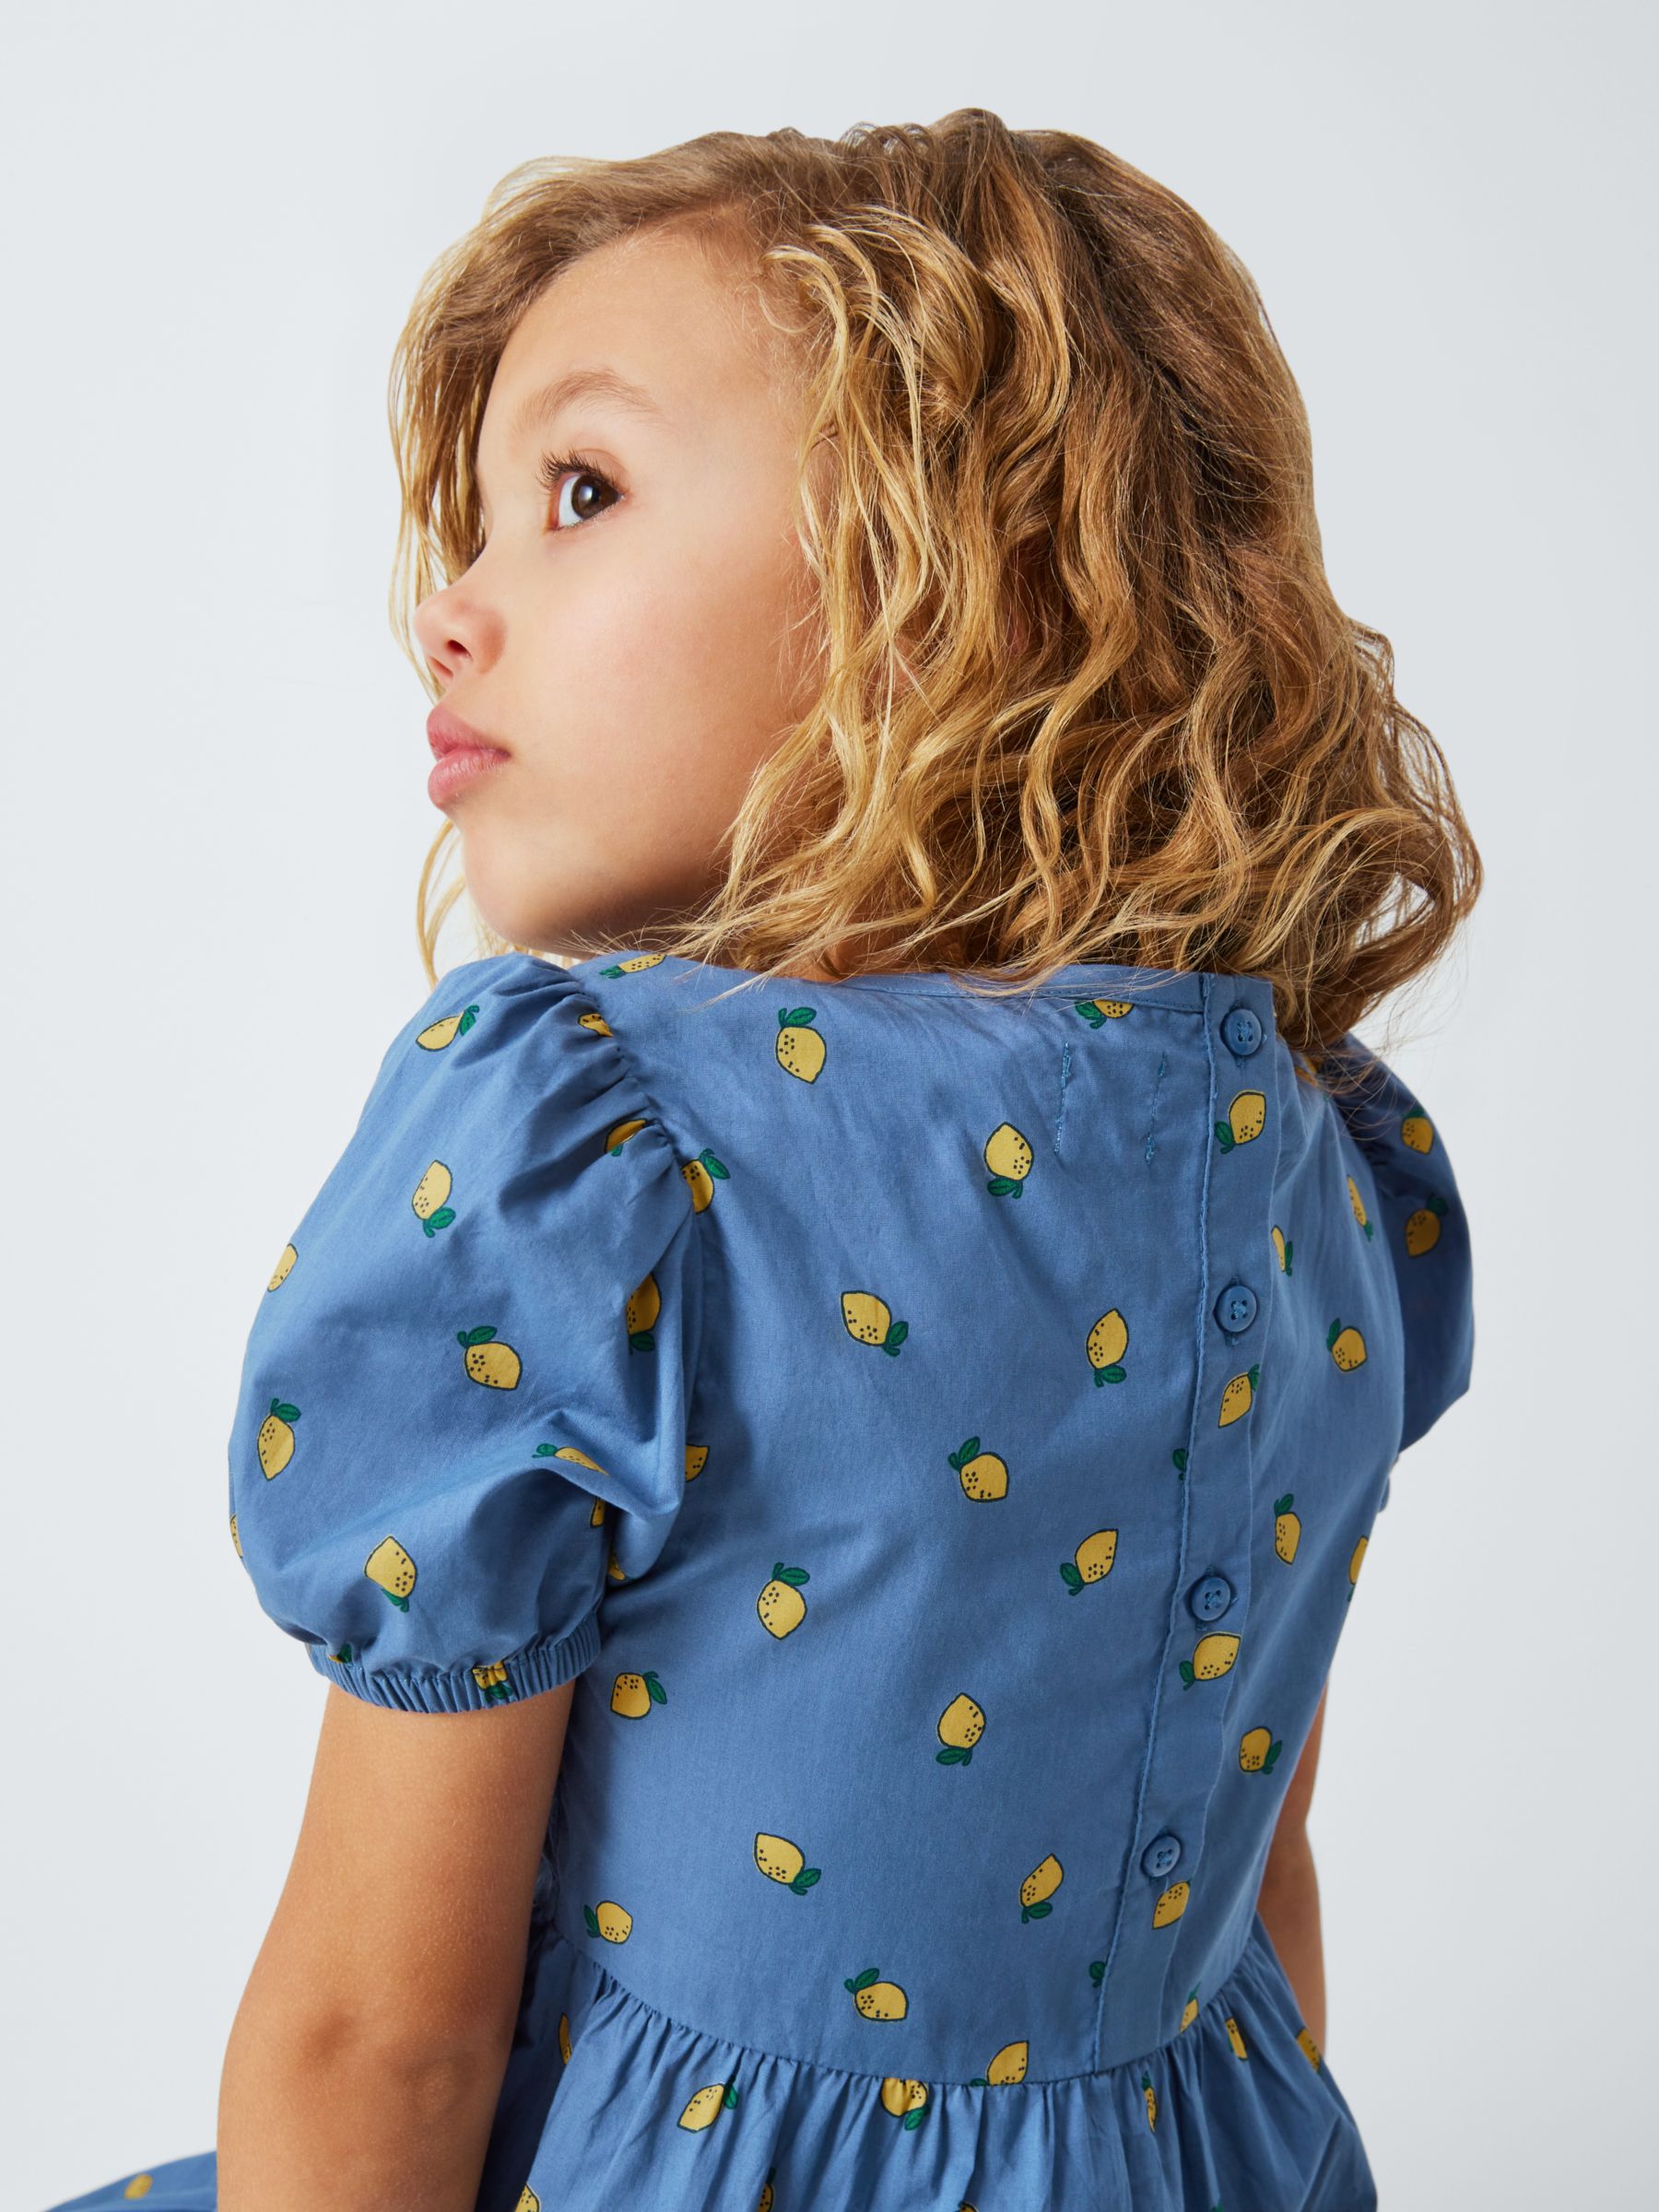 John Lewis ANYDAY Kids' Lemon Print Tiered Dress, Bijou Blue, 12 years